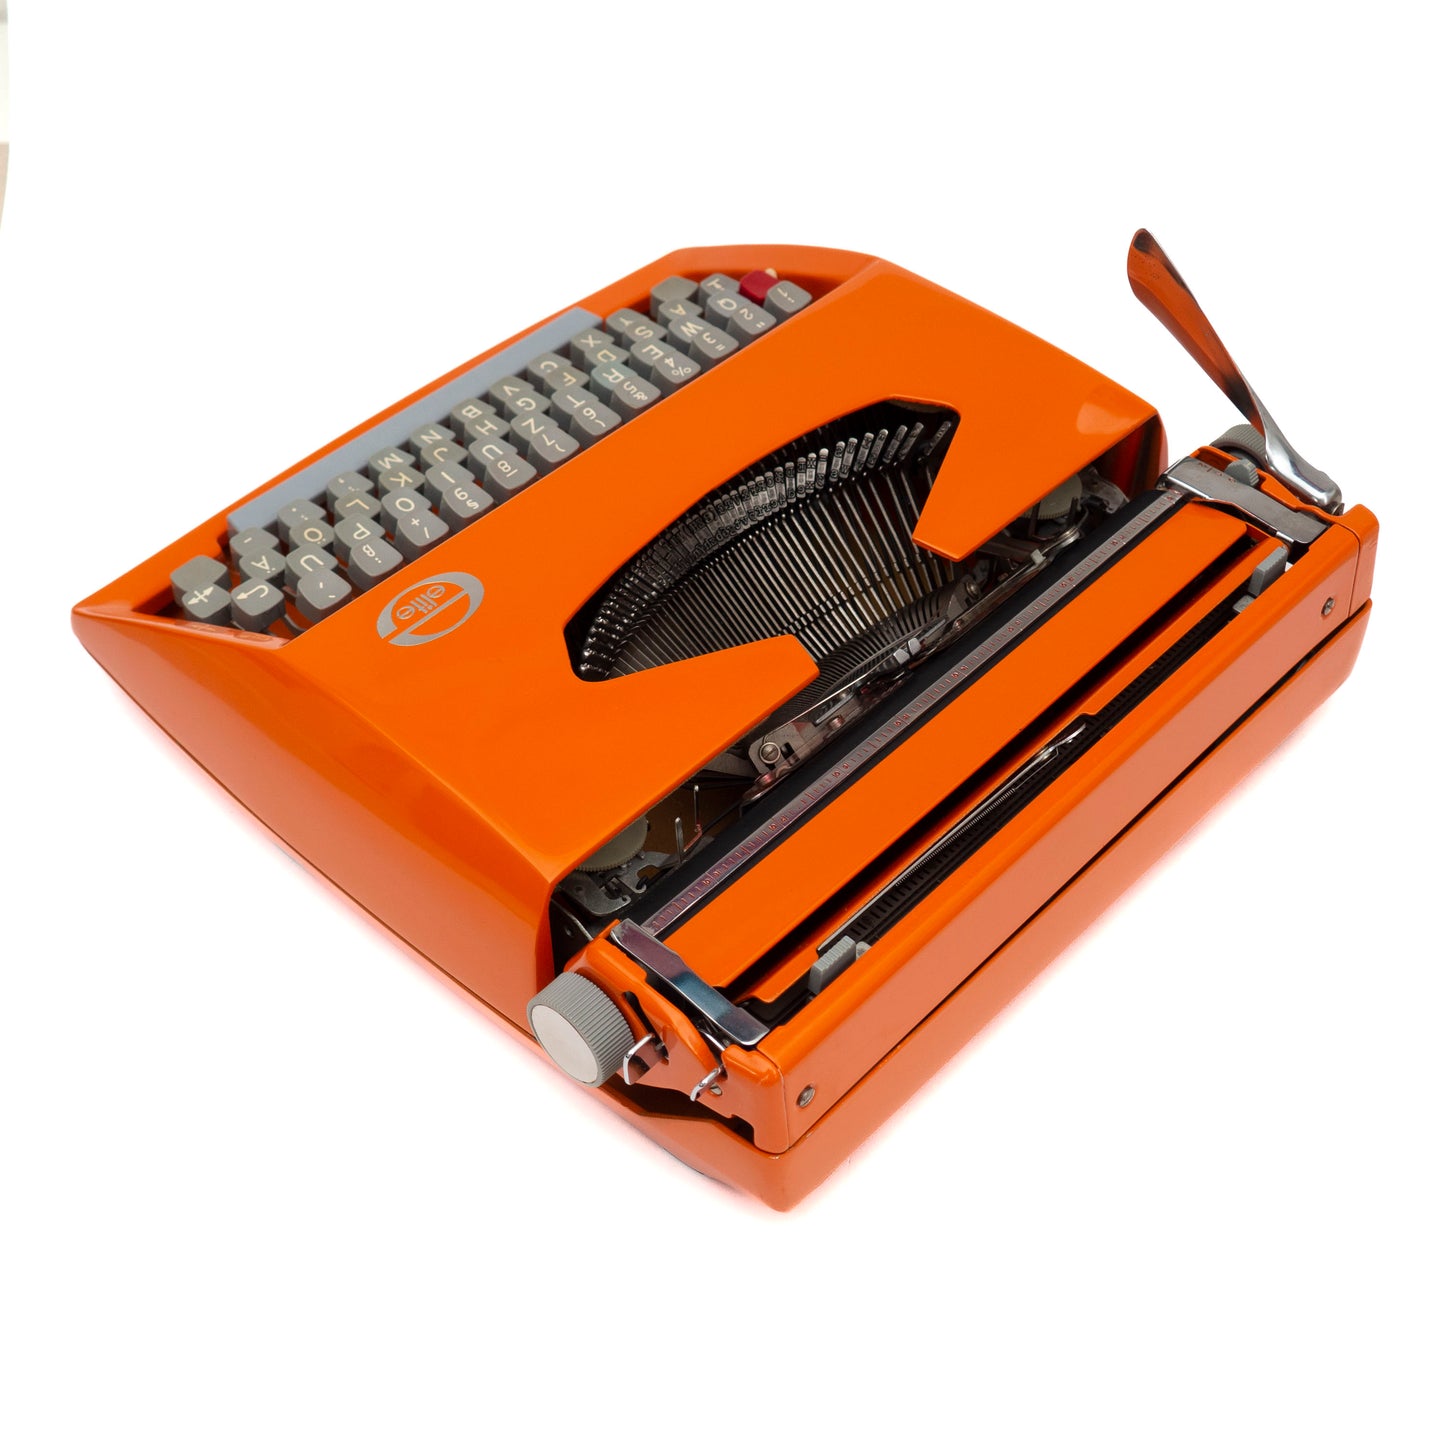 Portable Typewriter with Case, Orange 70s